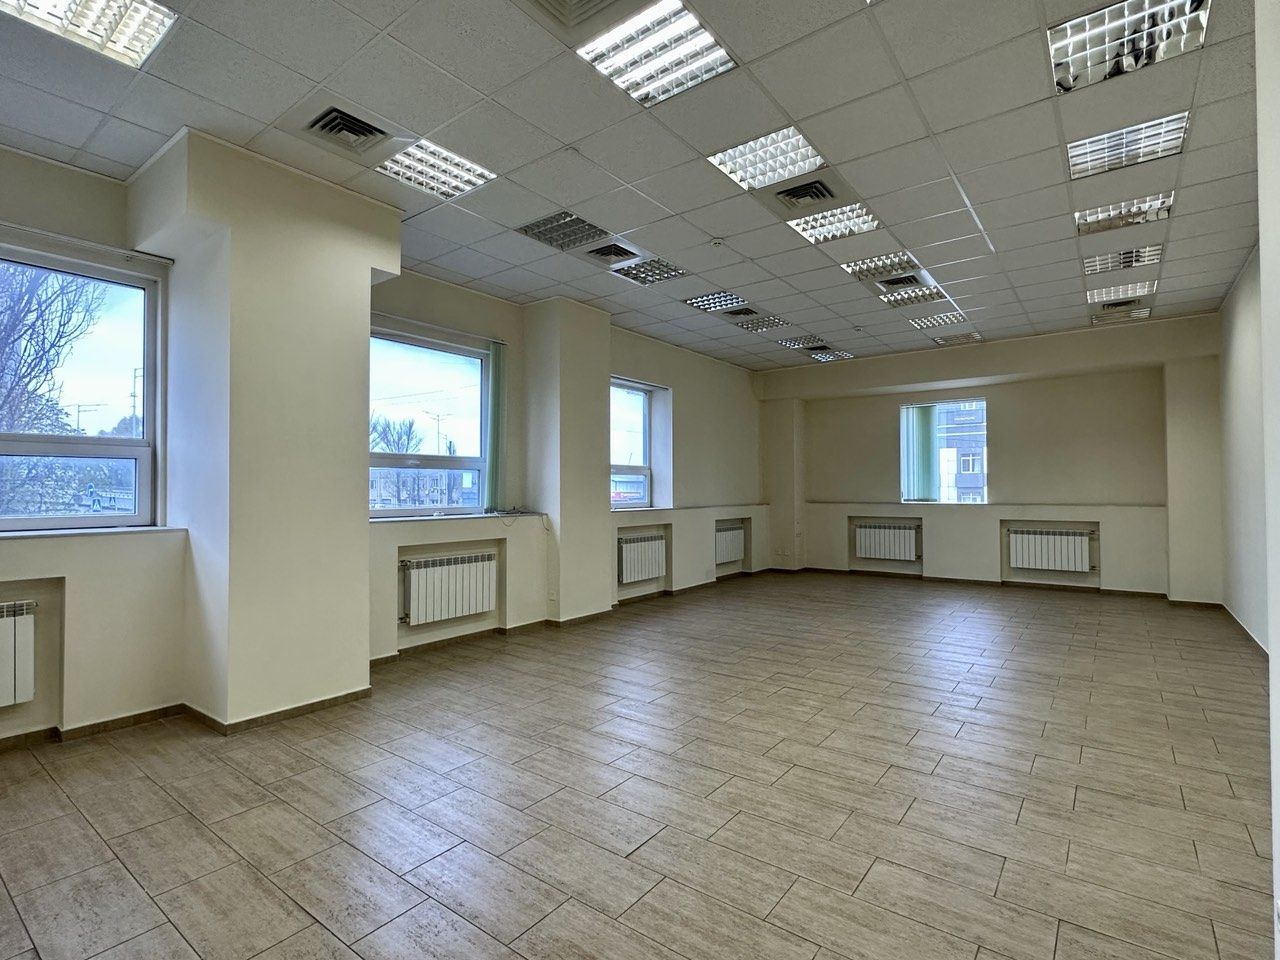  Офис, W-7178766, Новоконстантиновская, Киев - Фото 1